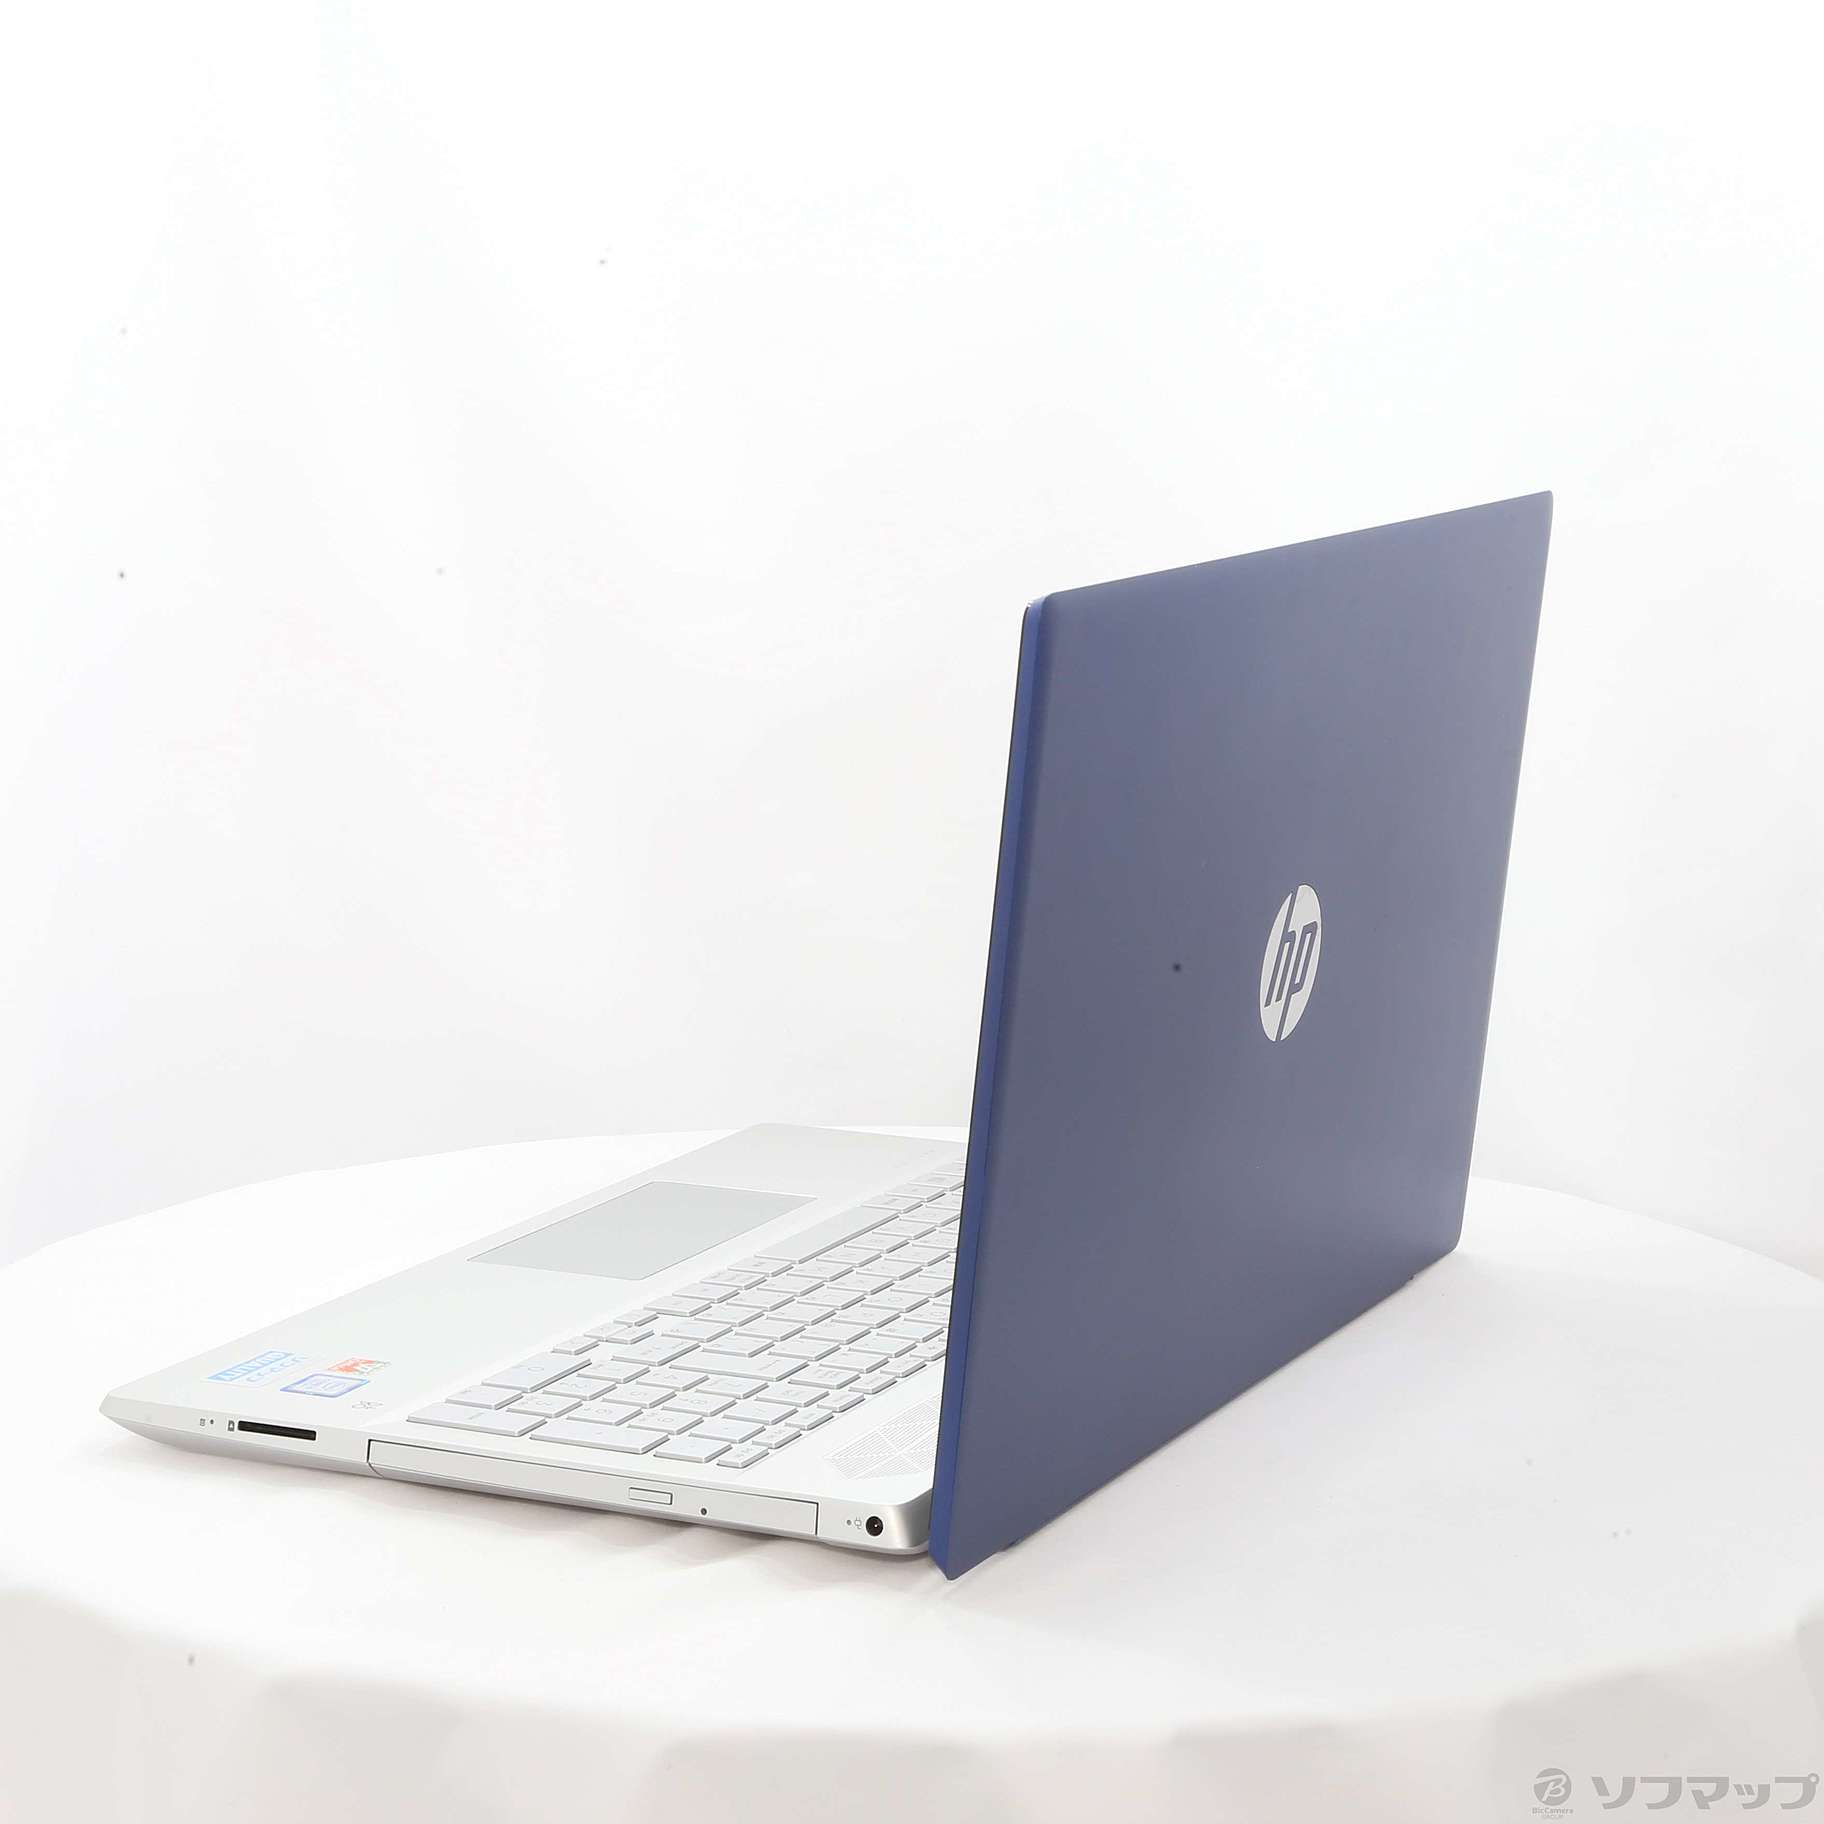 HP Pavilion Laptop 15-cu0004TU  ロイヤルブルー8GB